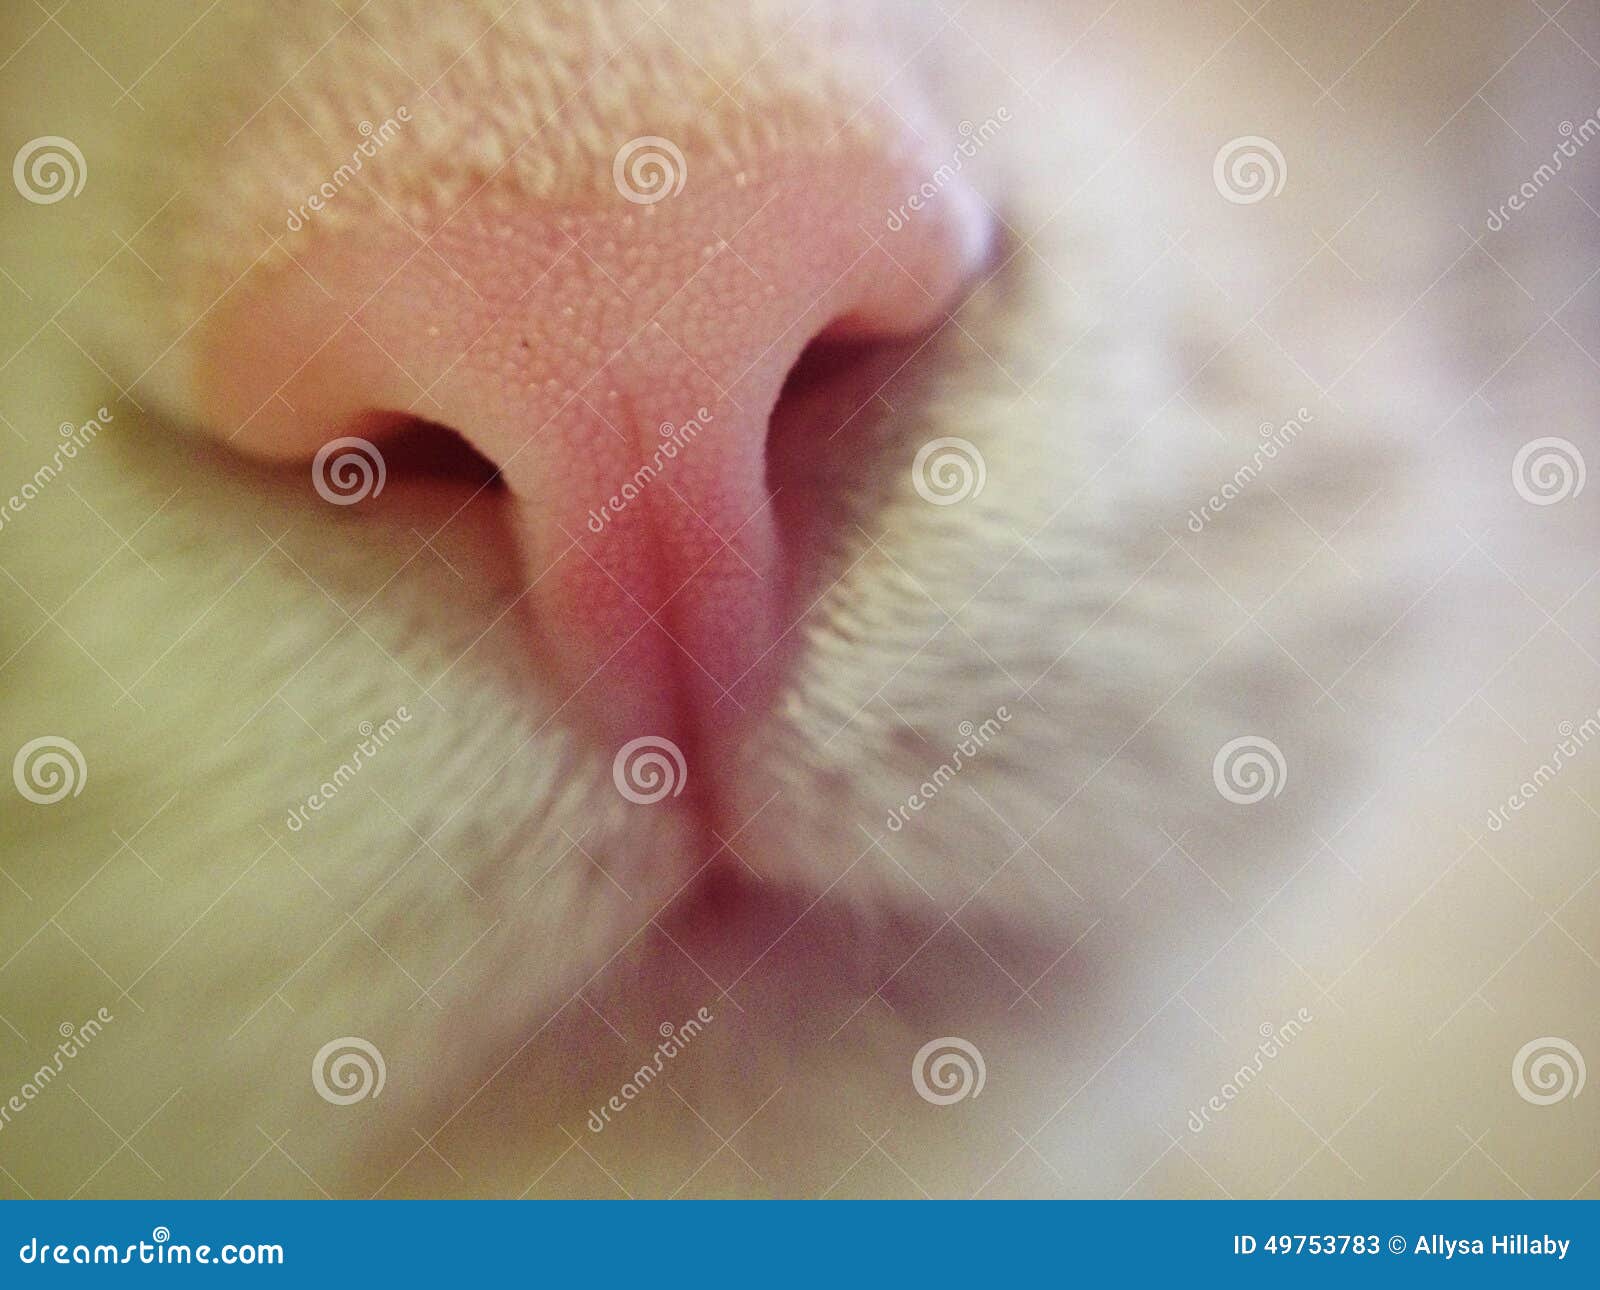 Нос кота. Розовый кошачий нос. Кошки сопли из носа